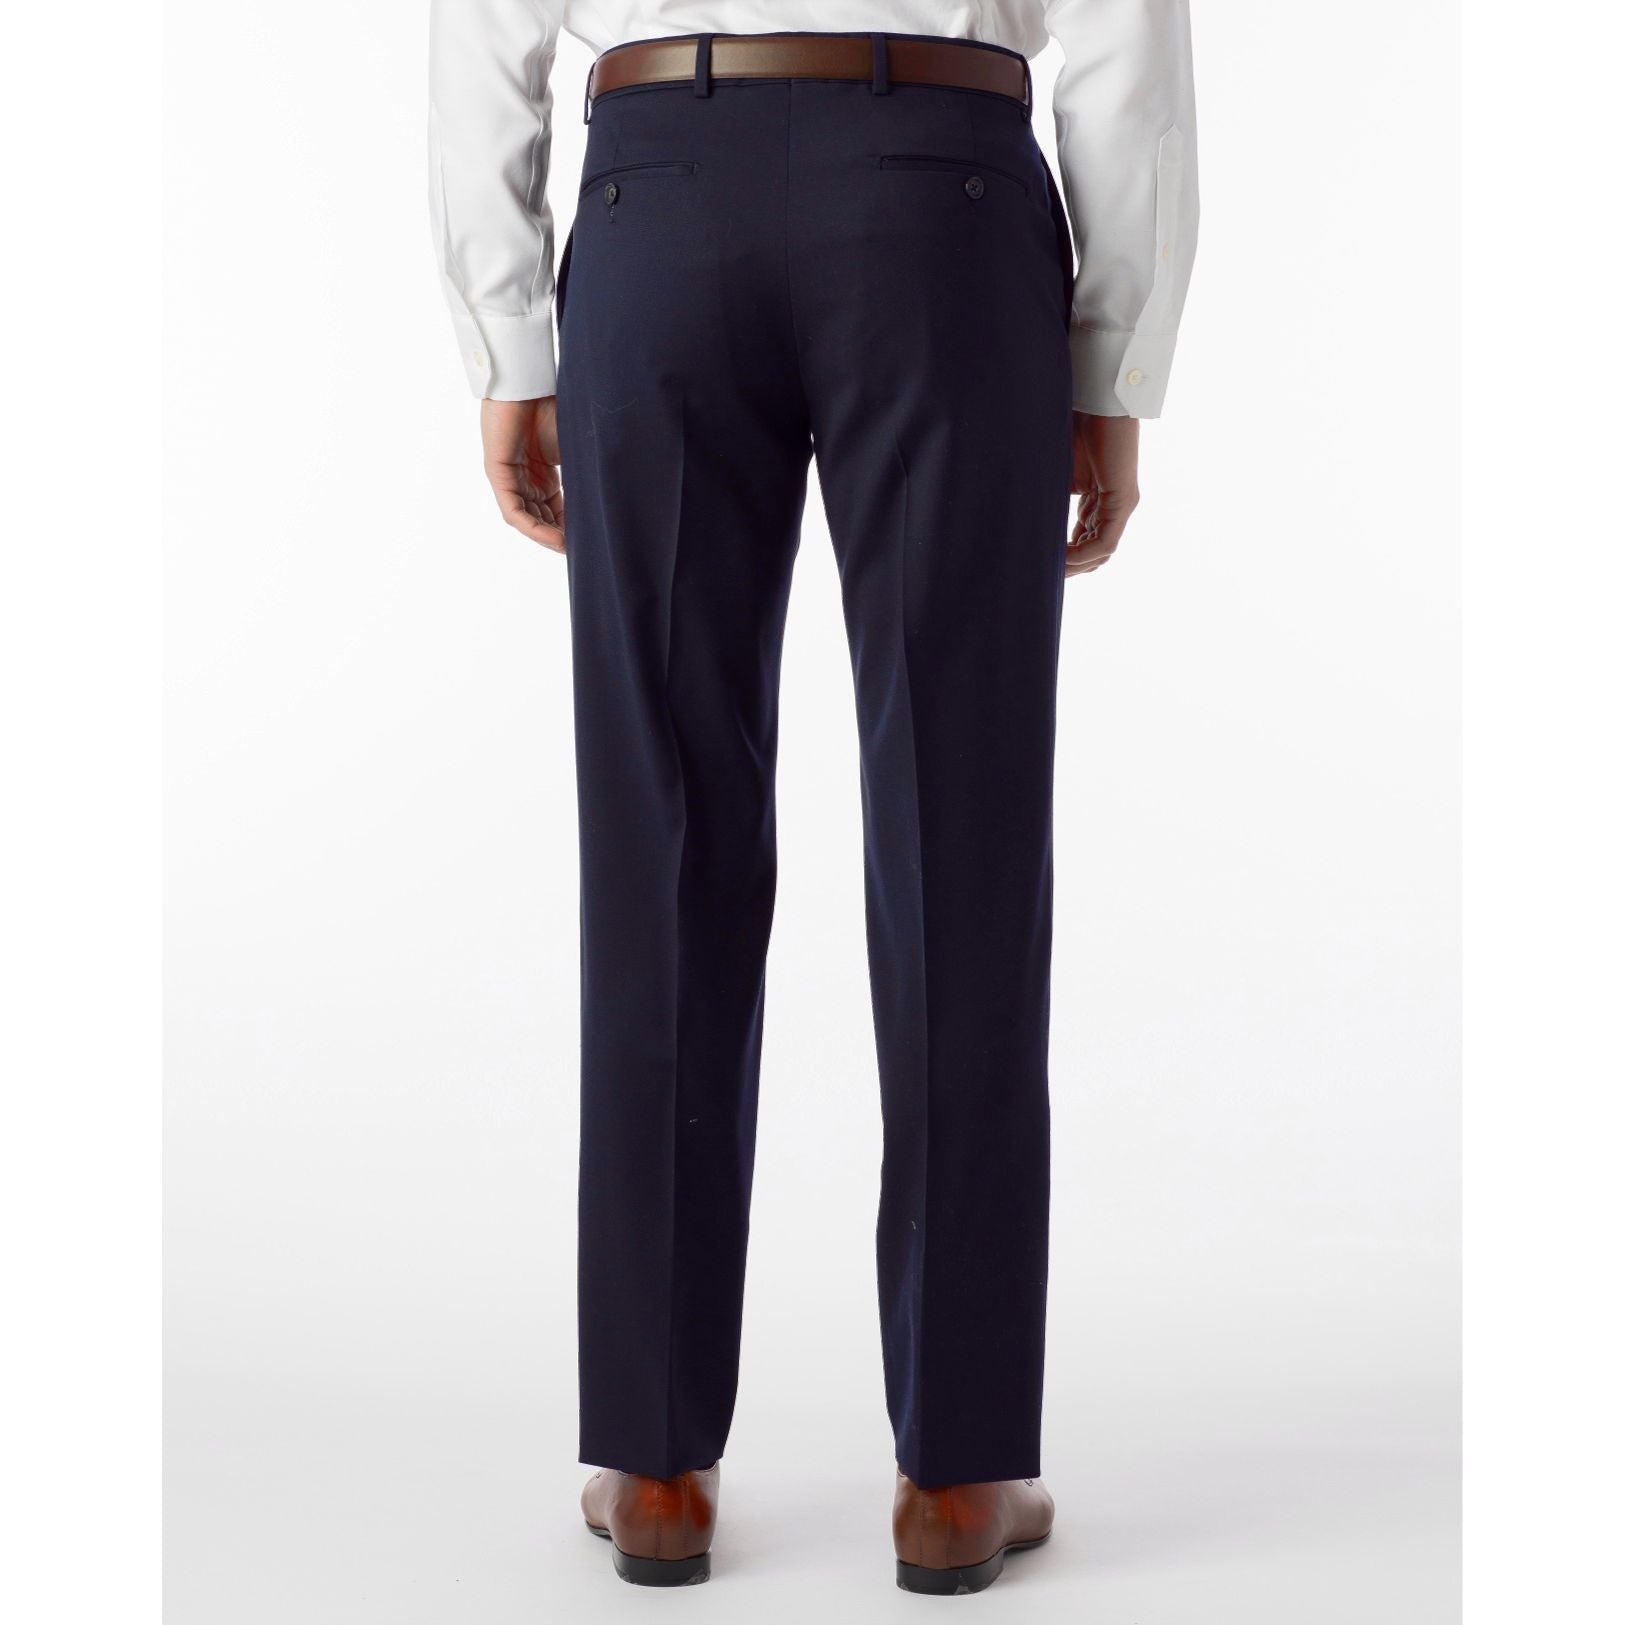 Super 120s Wool Gabardine Comfort-EZE Trouser in Mariner (Flat Front Models) by Ballin